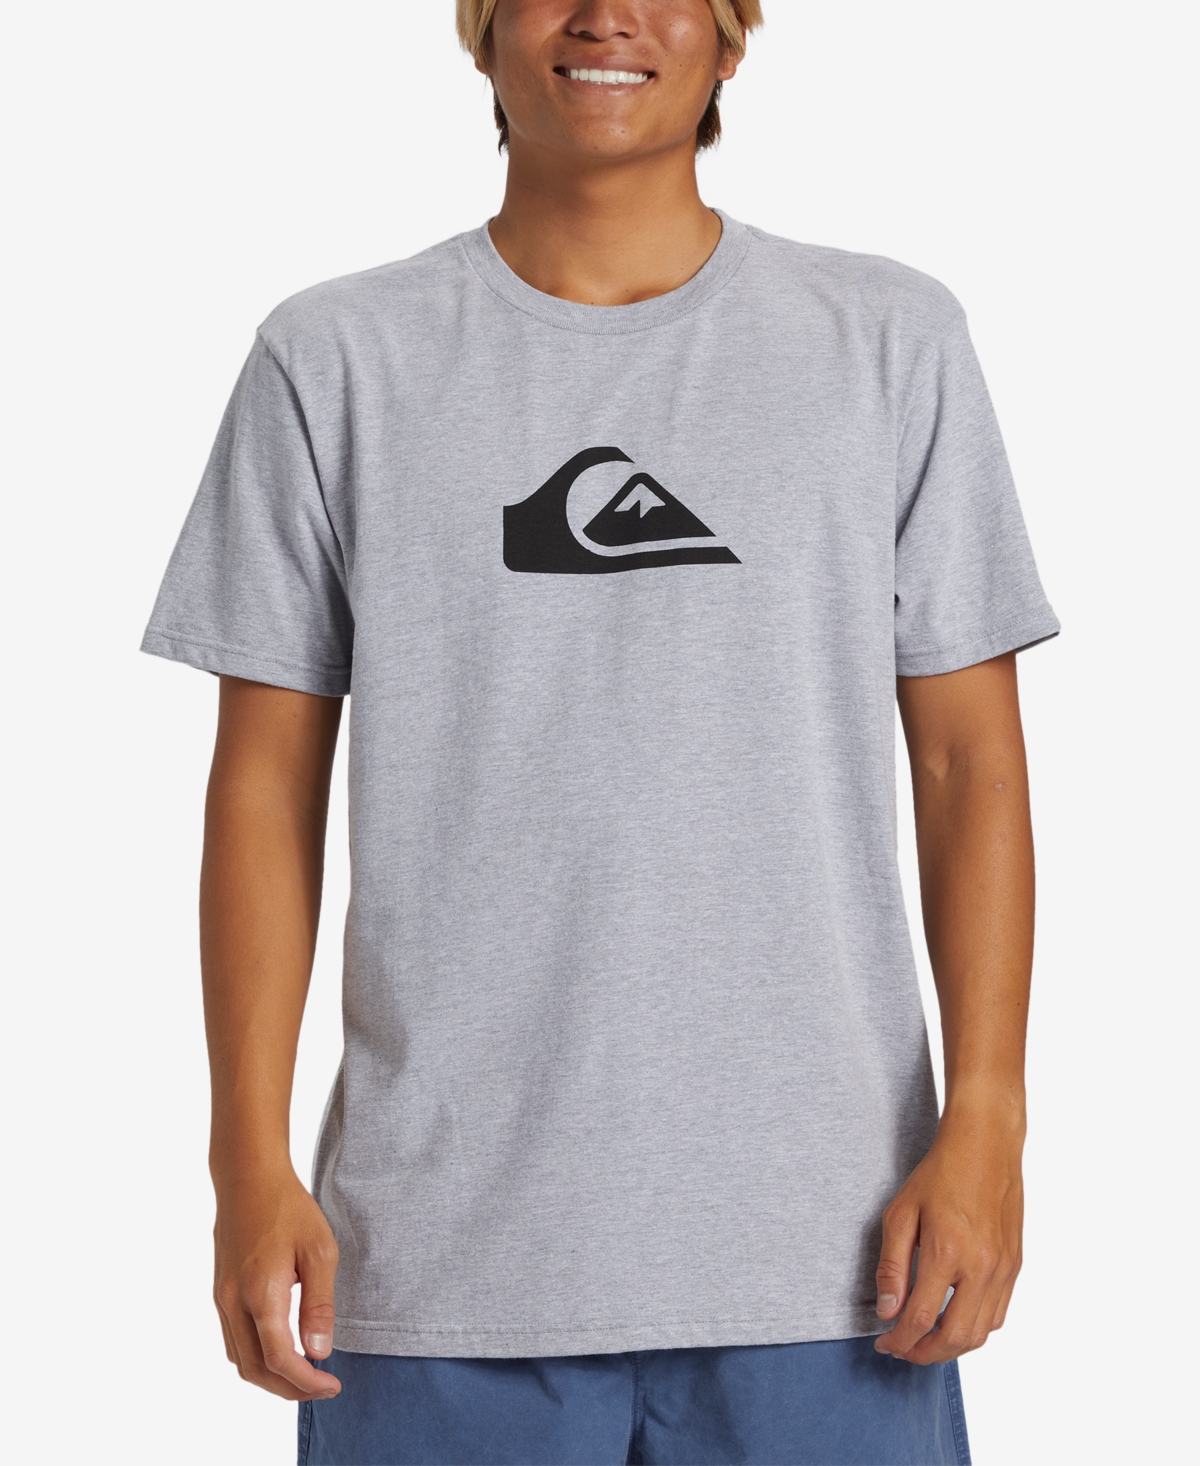 Men's Comp Logo Mt0 Short Sleeve T-shirt - Athletic Heather